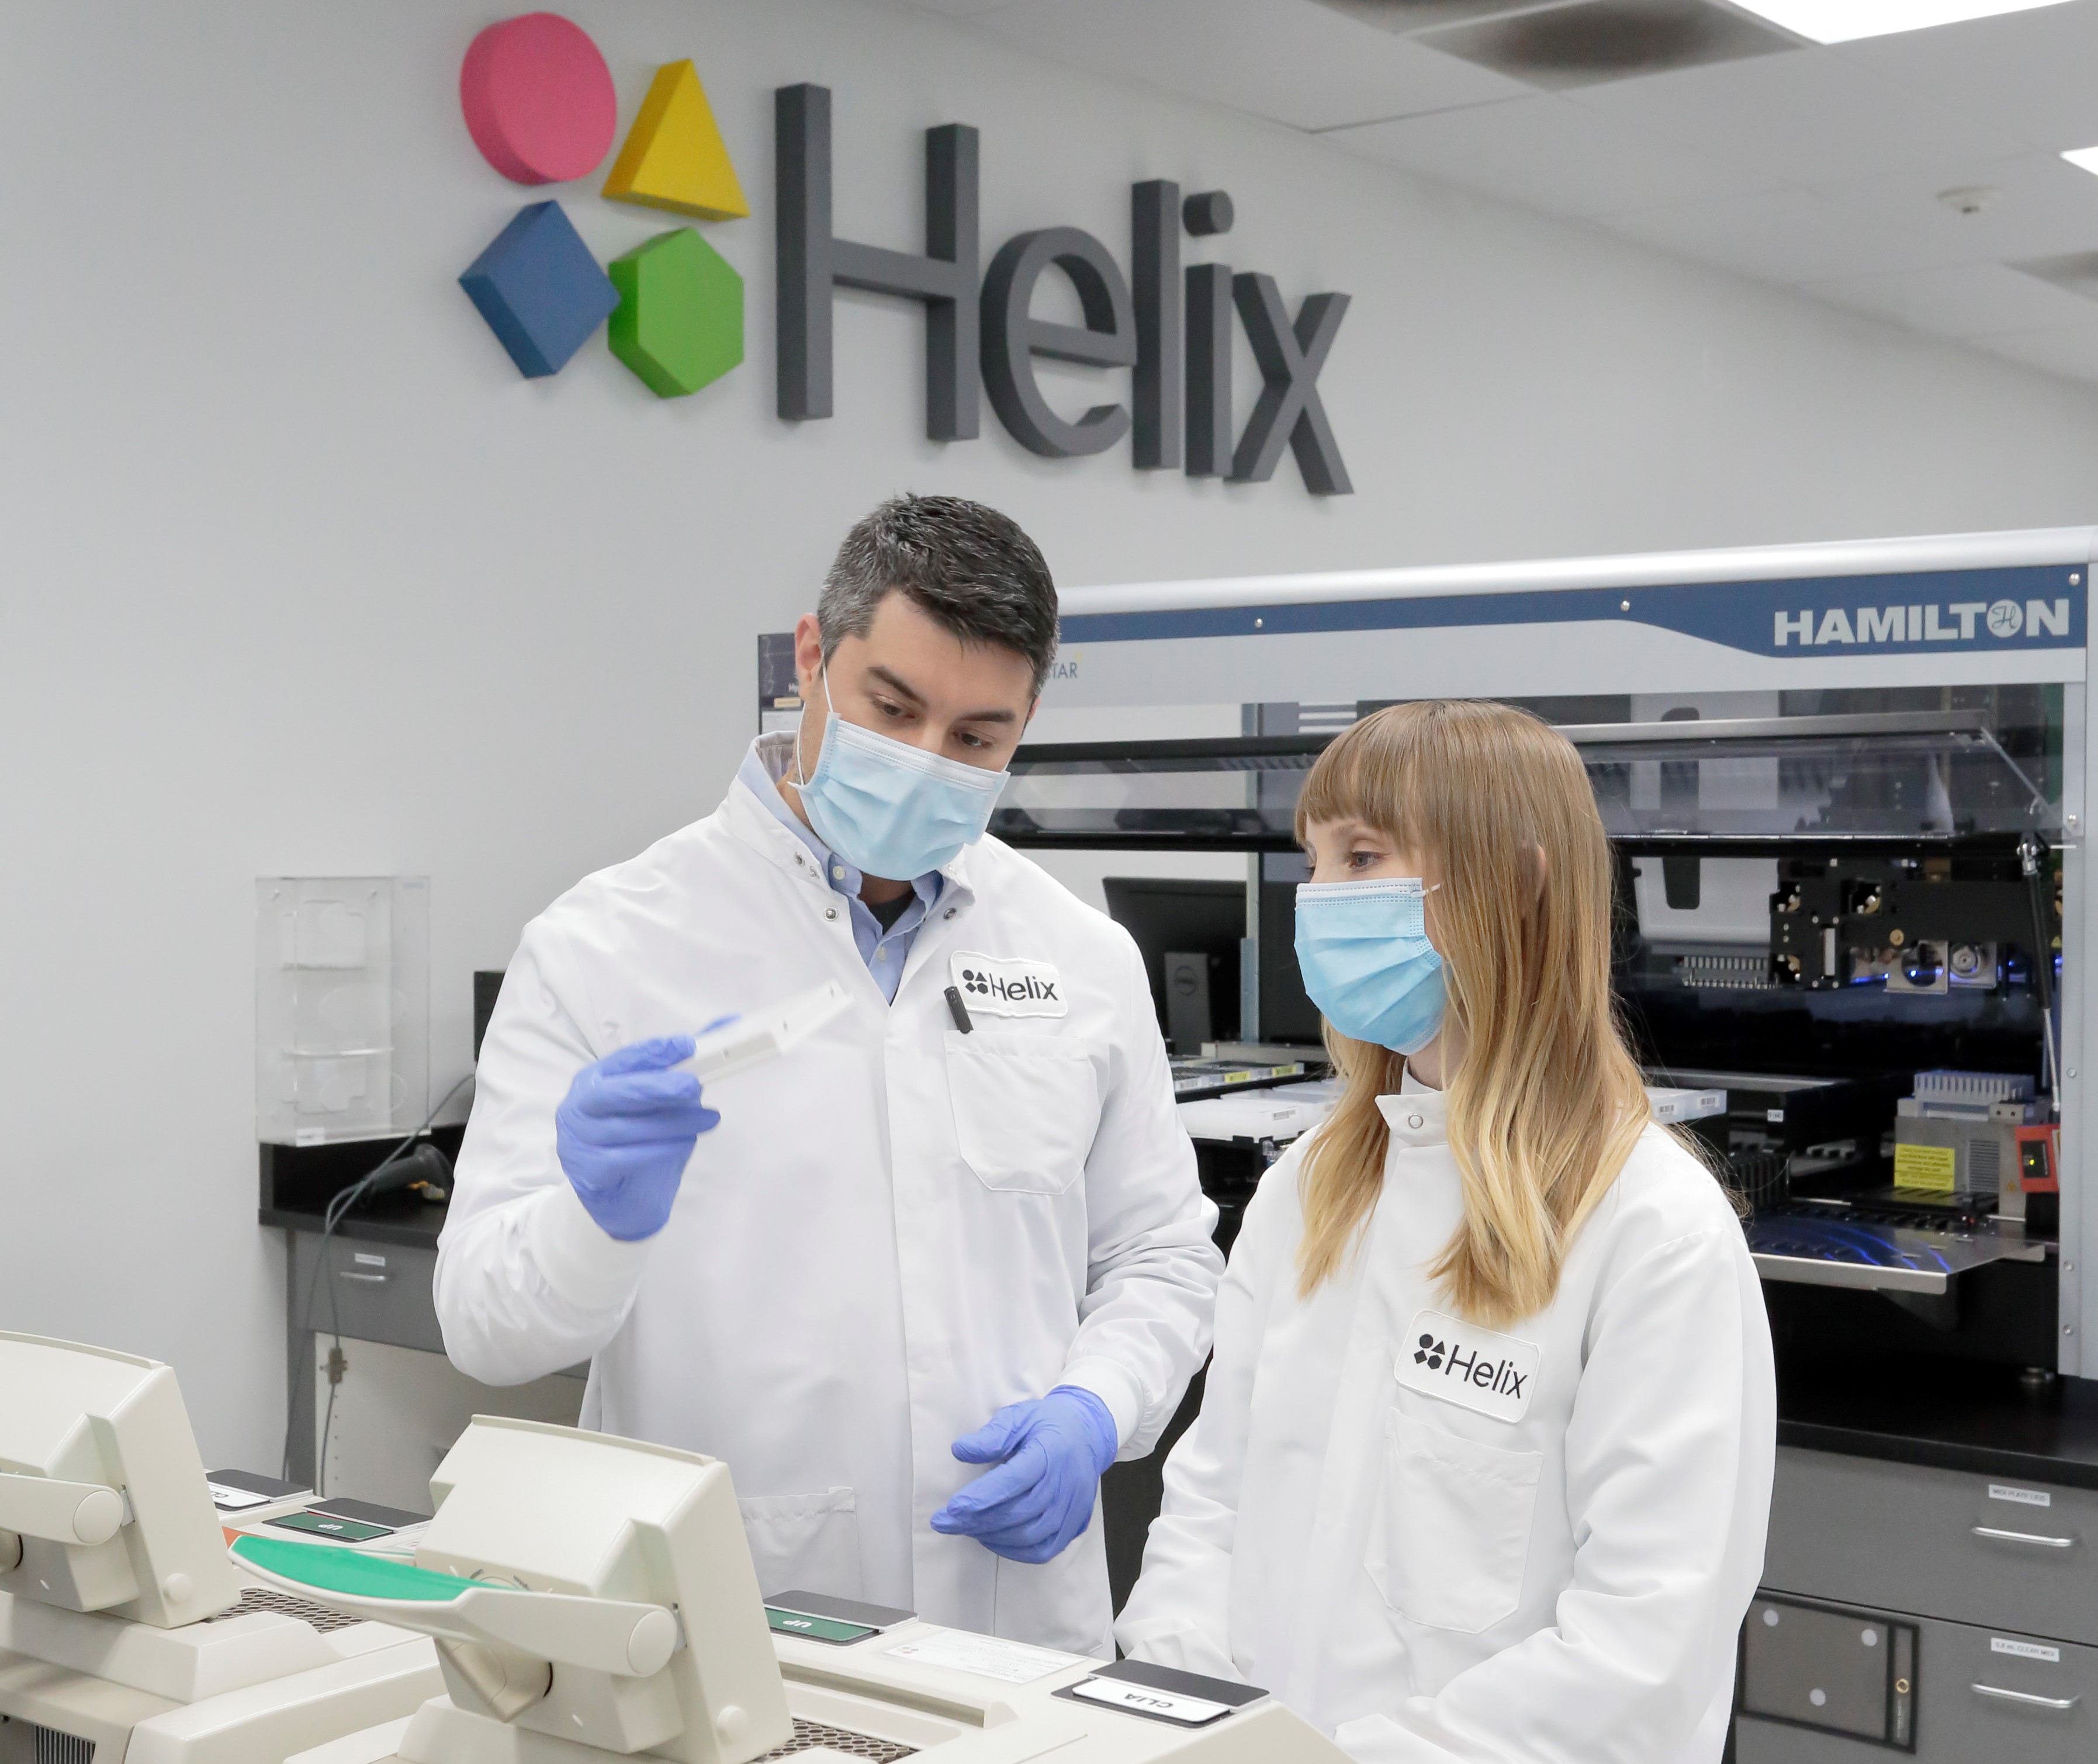 SLUHN and Helix Partner on Population Genomics Research Program to Accelerate Precision Medicine